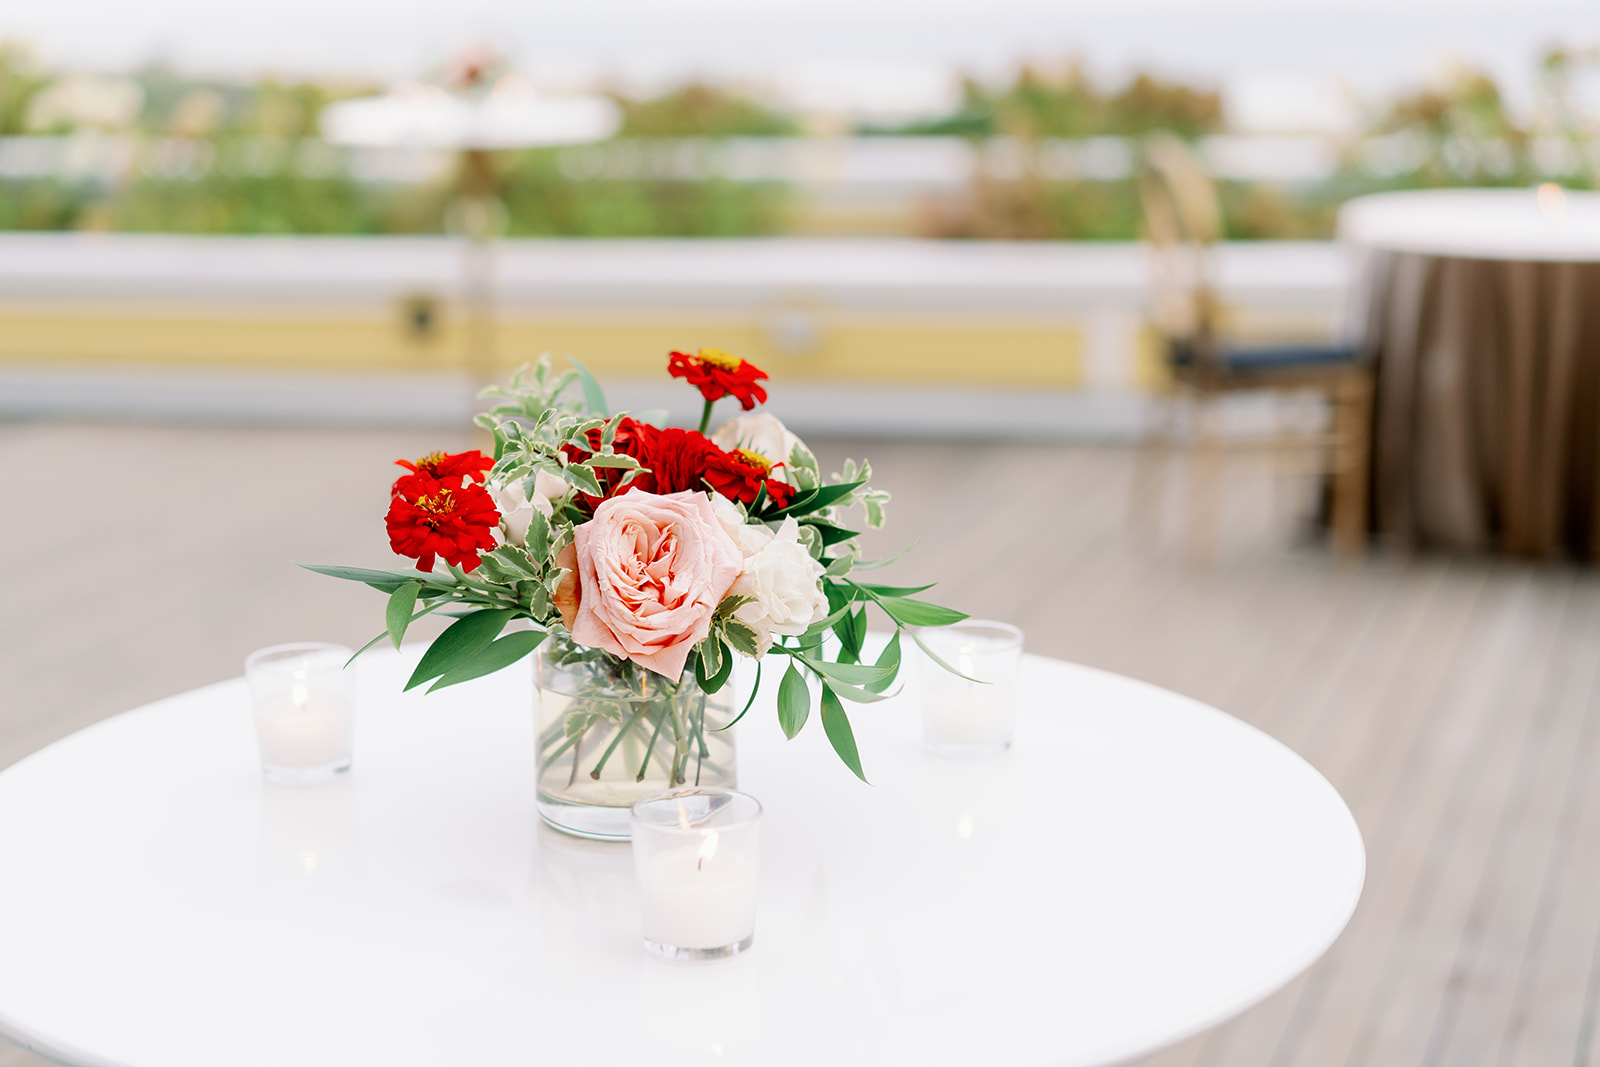 Wedding cocktail table floral centerpiece. 